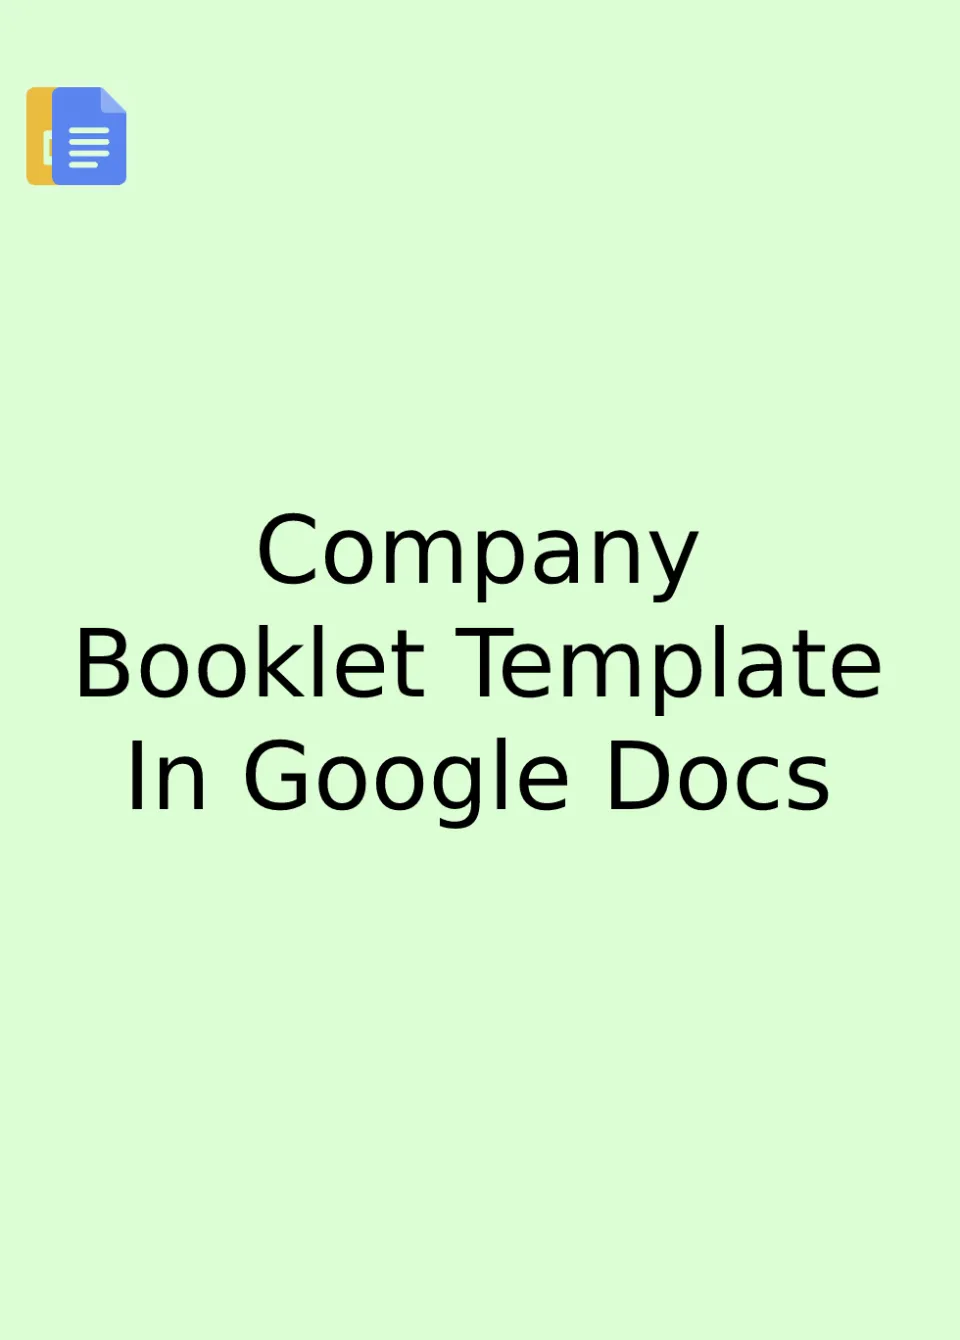 Company Booklet Template Google Docs